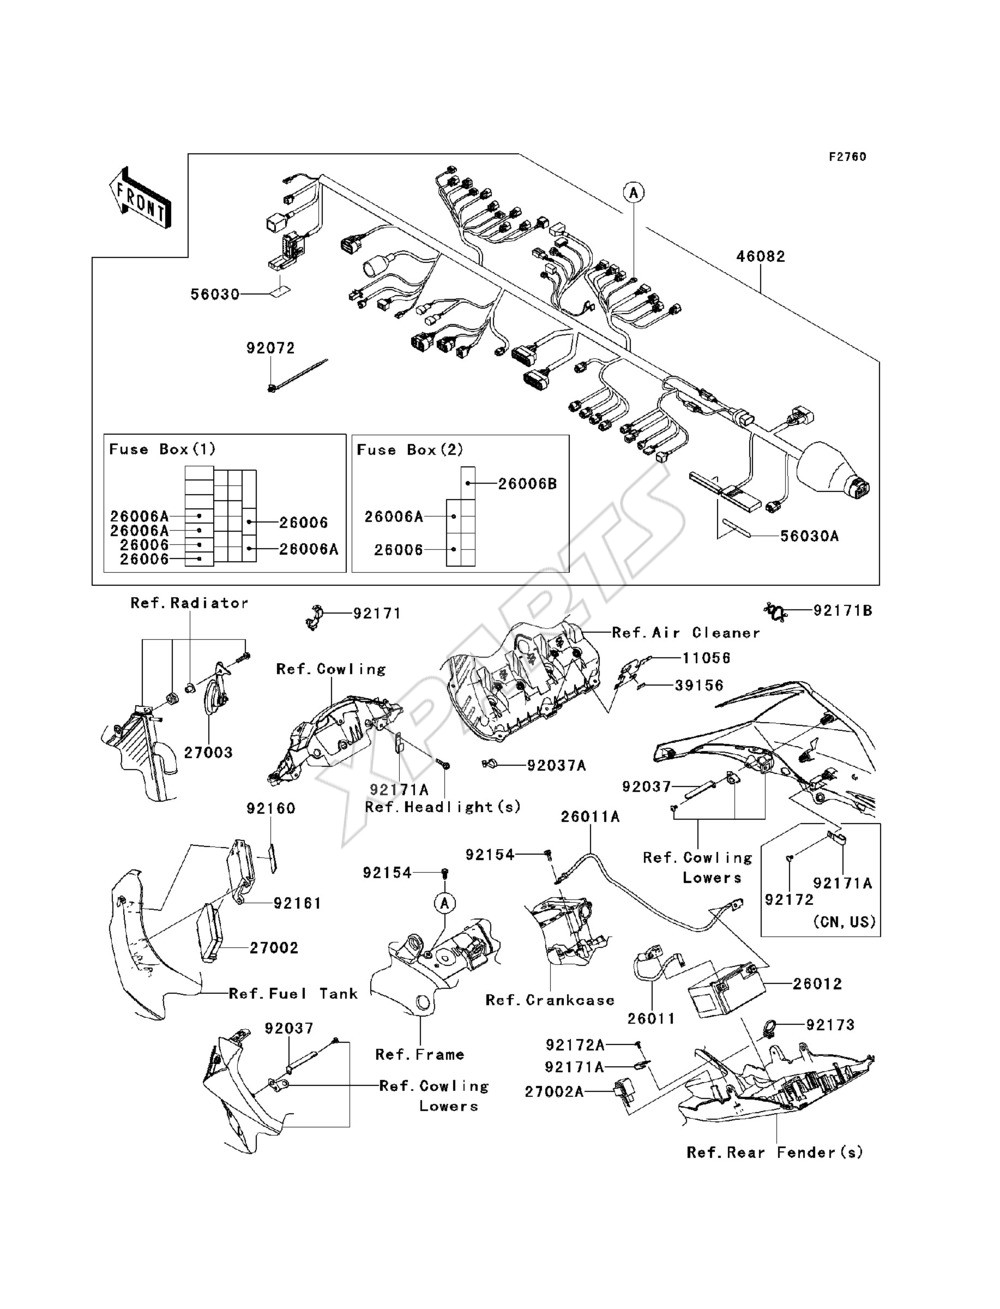 Bild für Kategorie Chassis Electrical Equipment(JBF)